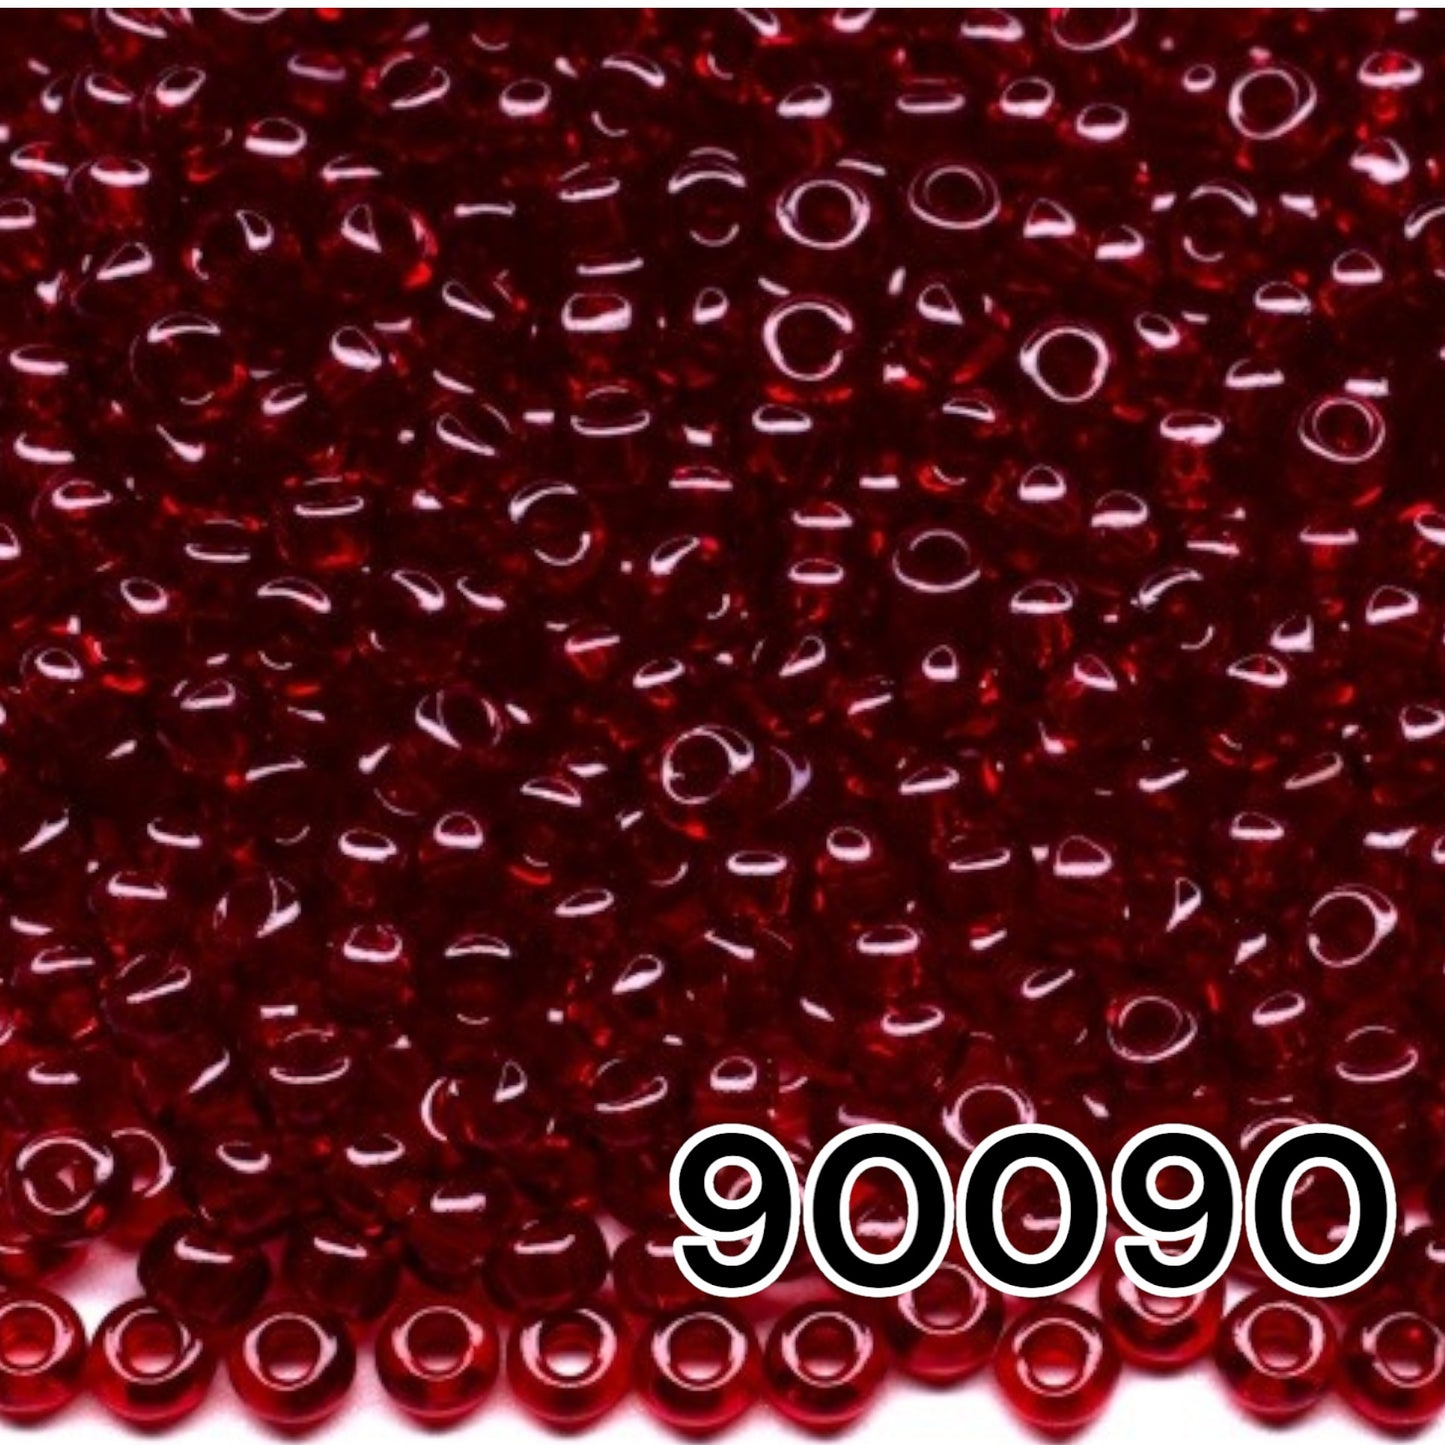 90090 Czech Seed Beads Preciosa Rocailles Transparent